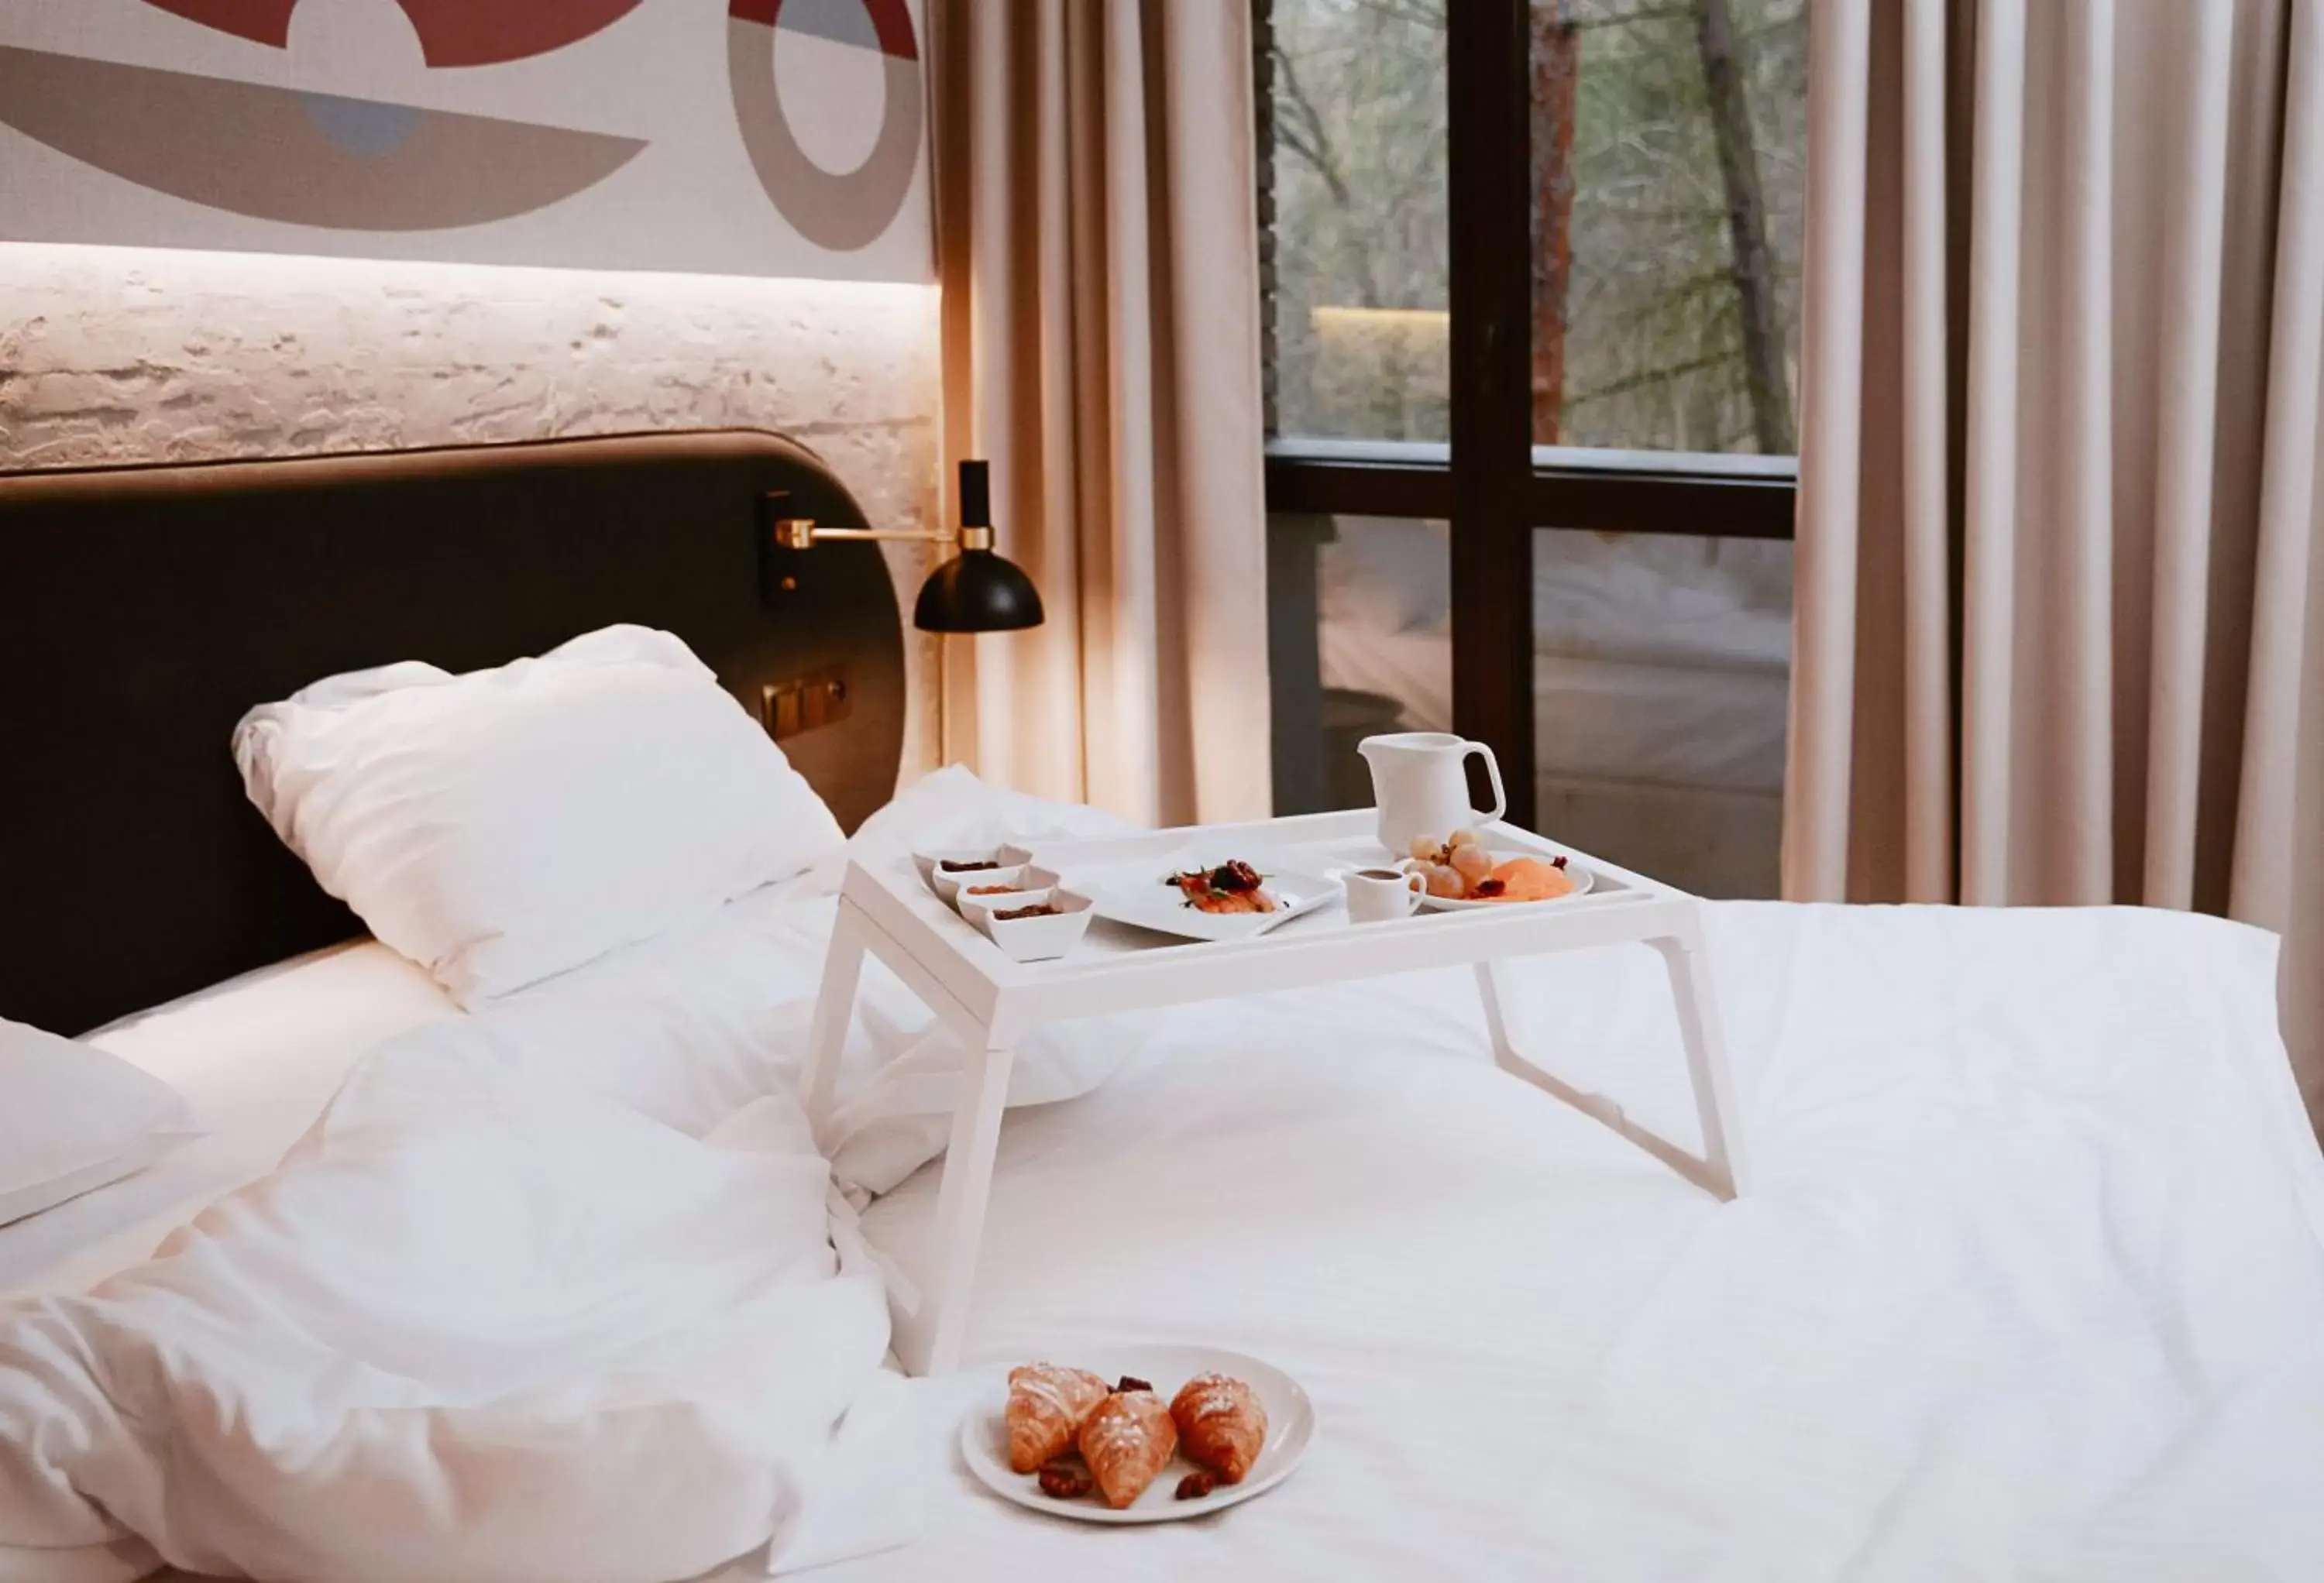 Breakfast, Bed in Forest Hotel